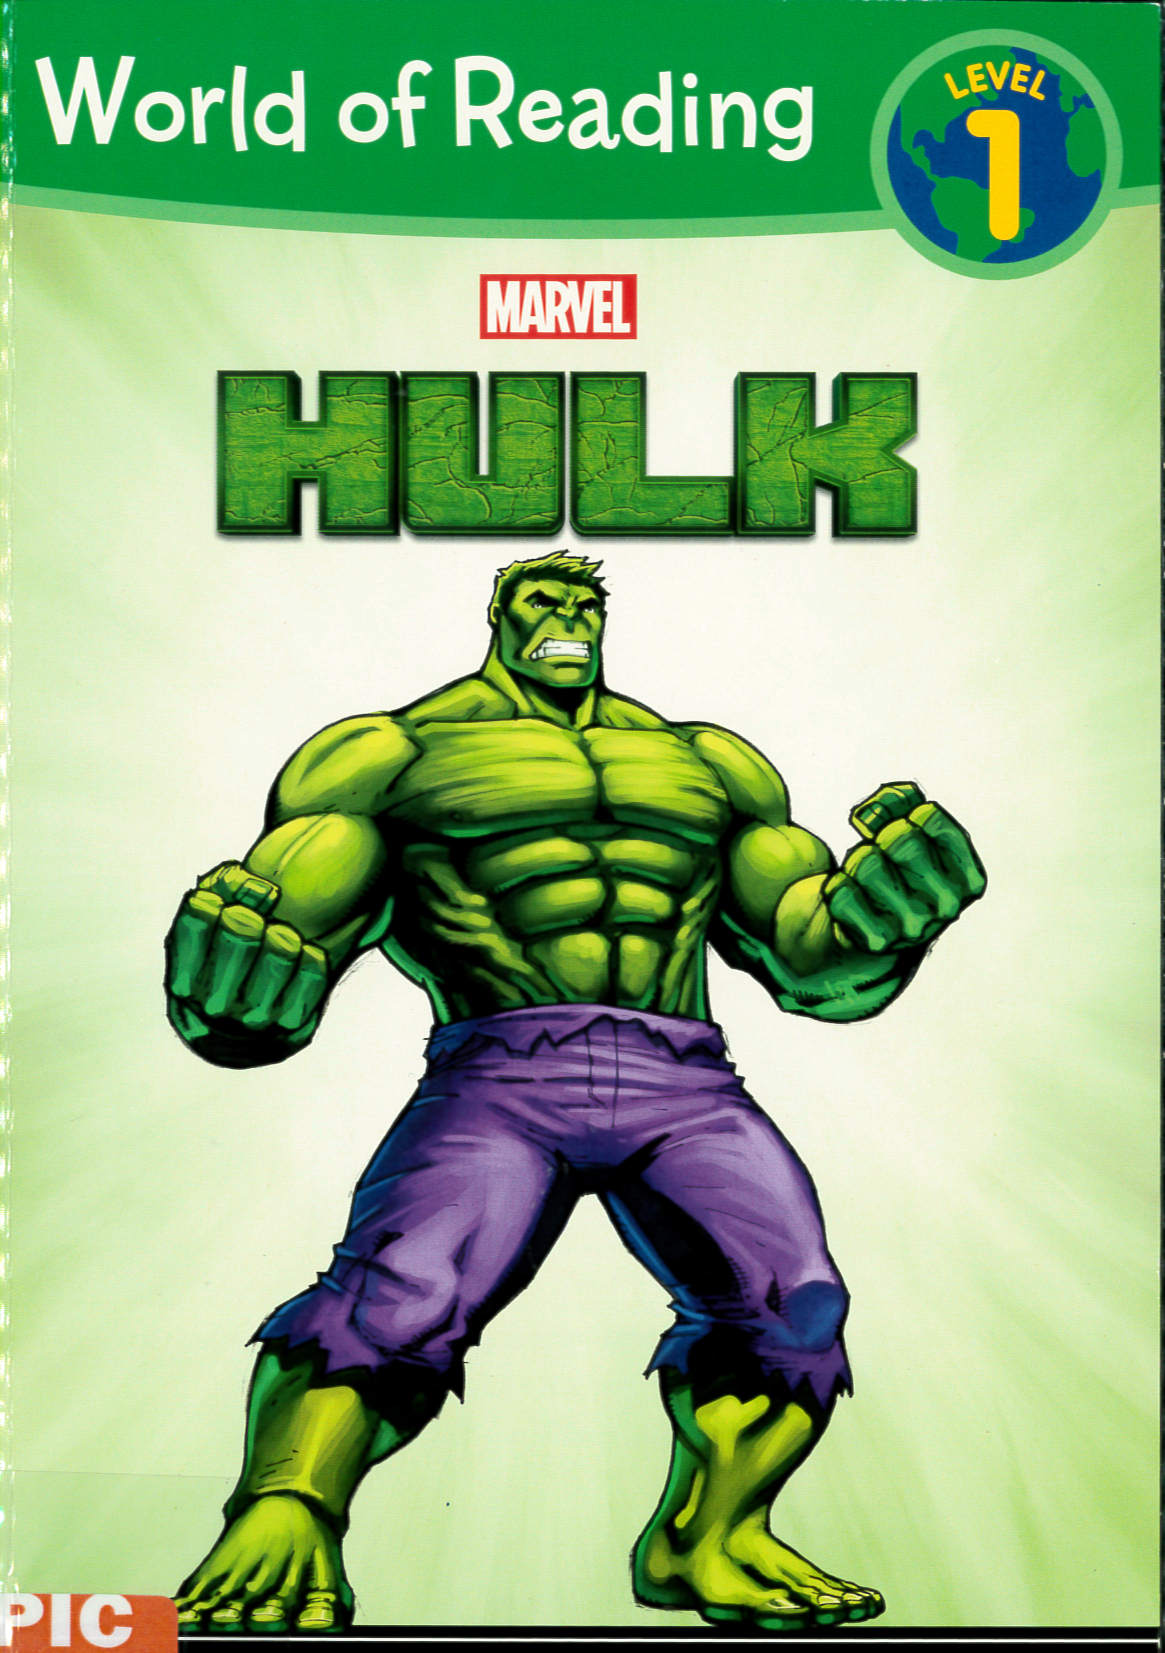 This is Hulk /